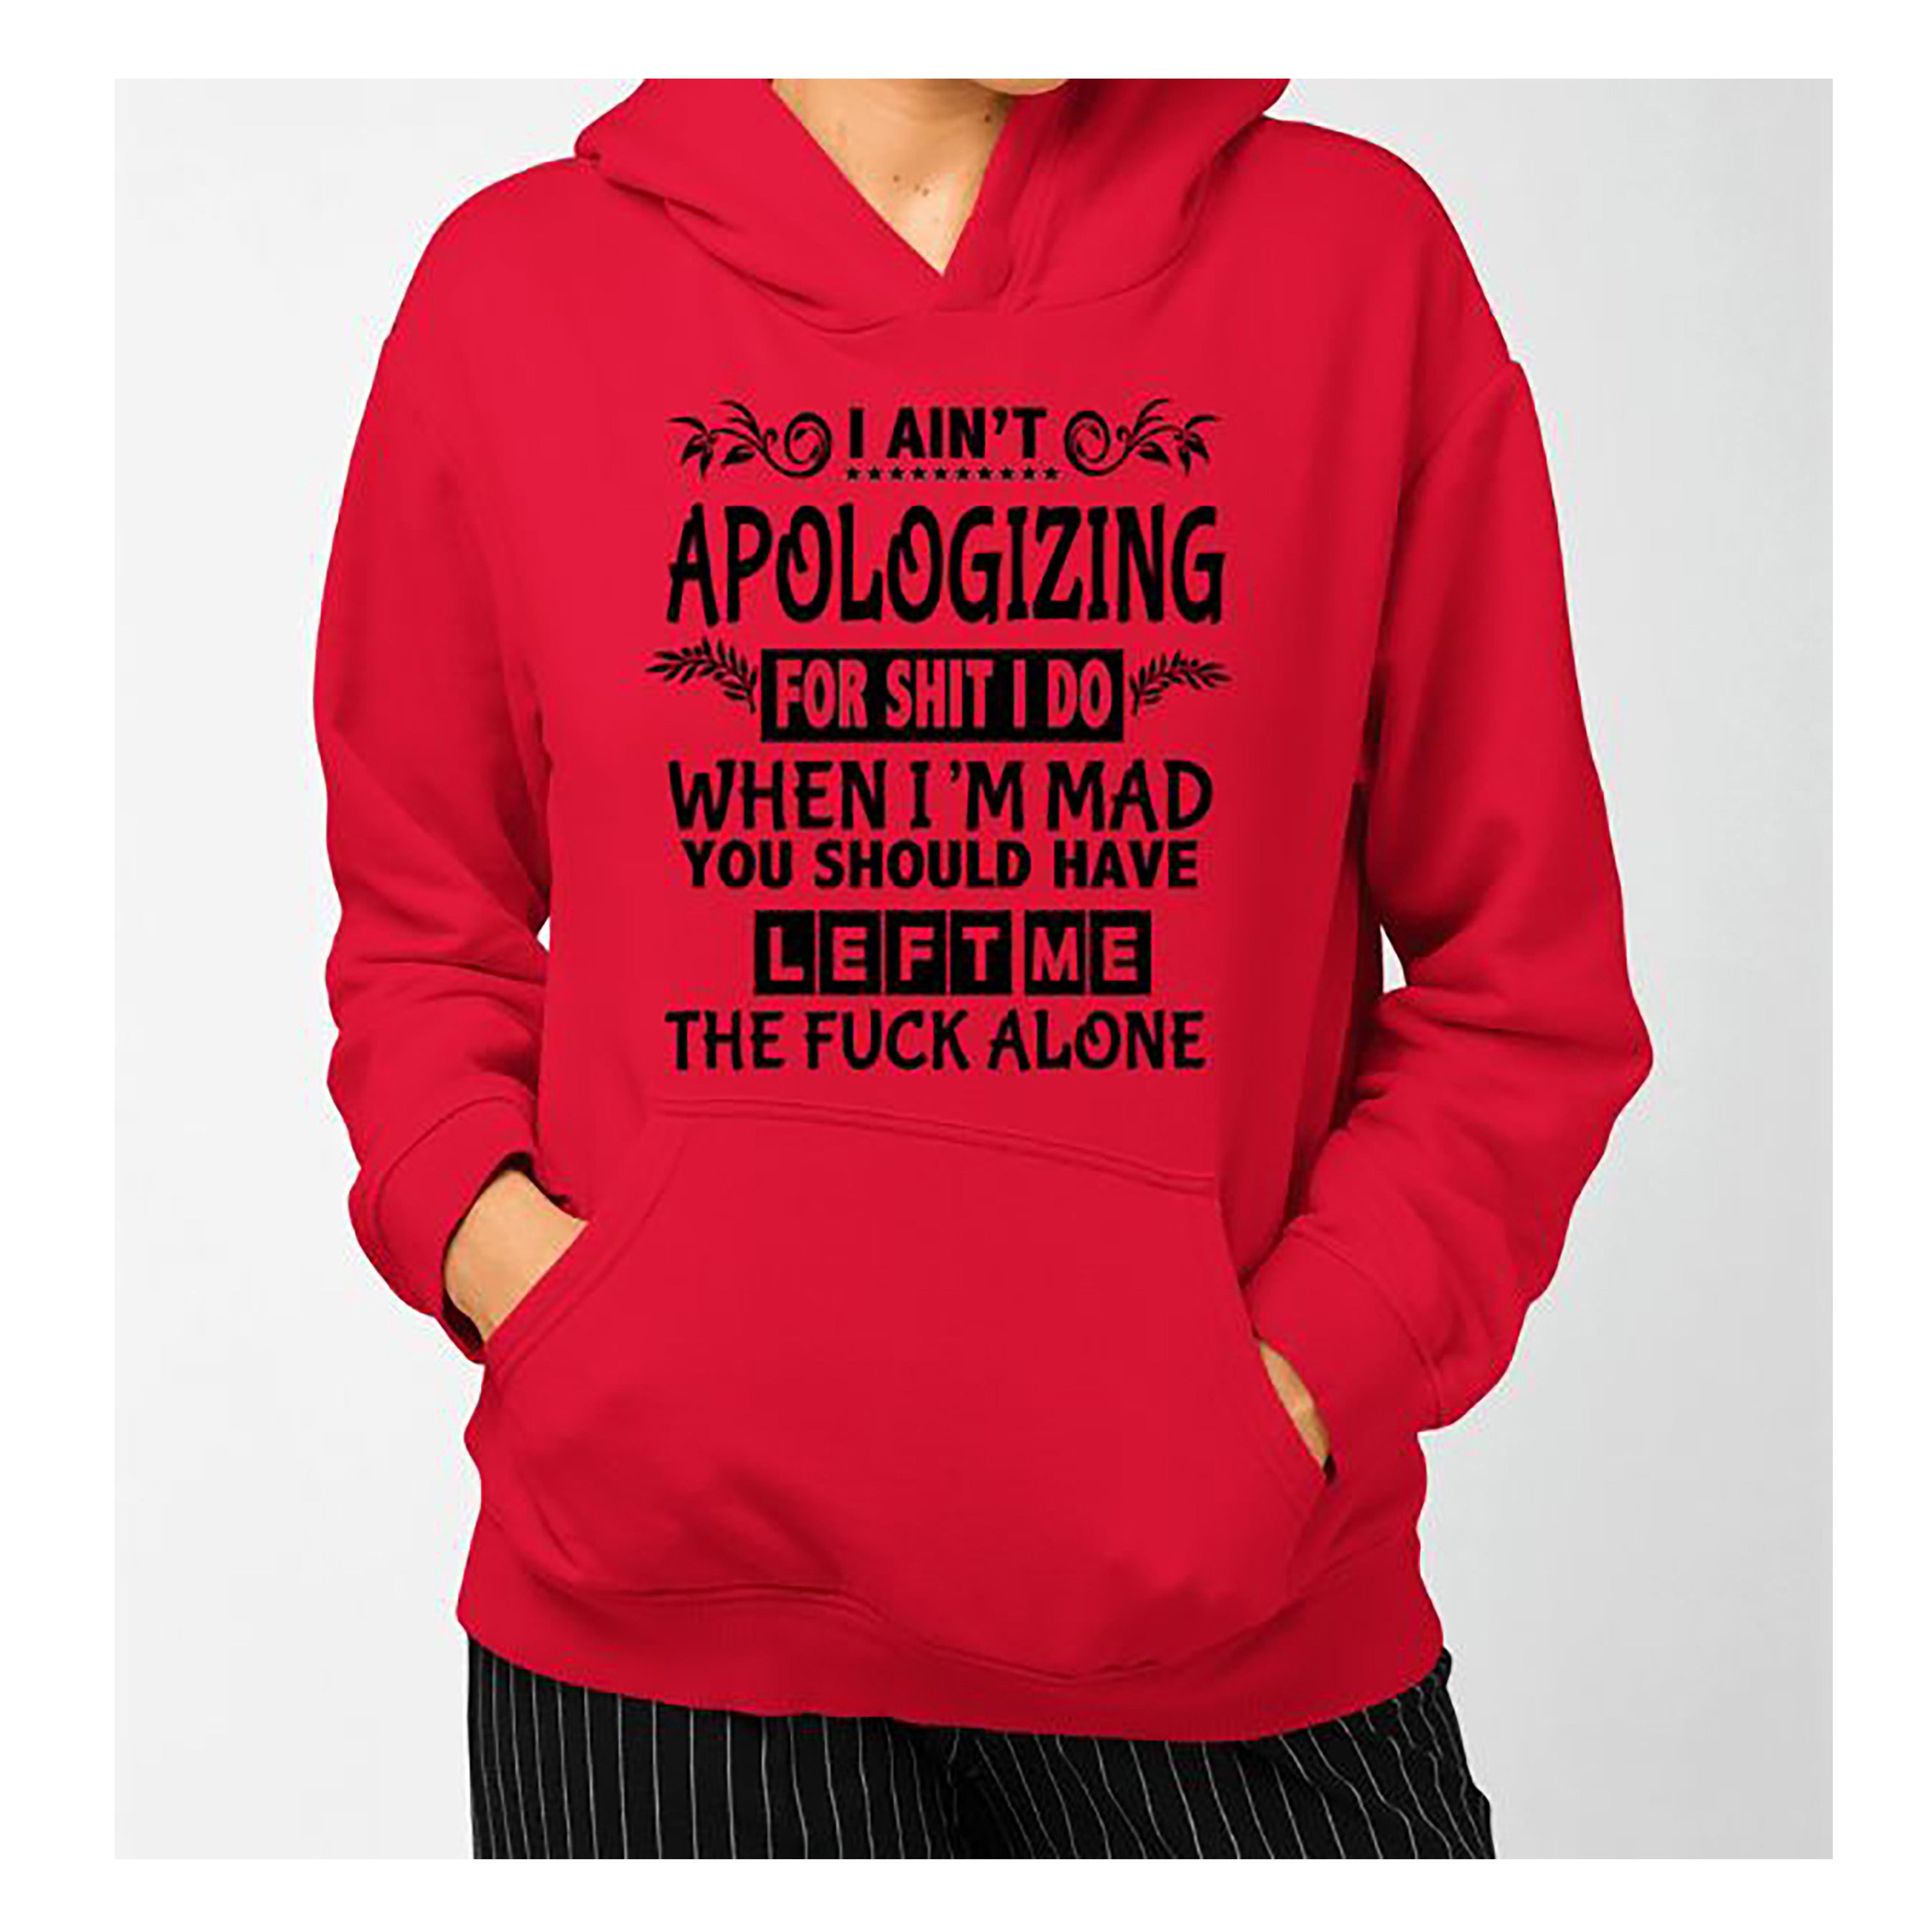 "I AIN'T APOLOGIZING" Hoodie & Sweatshirt